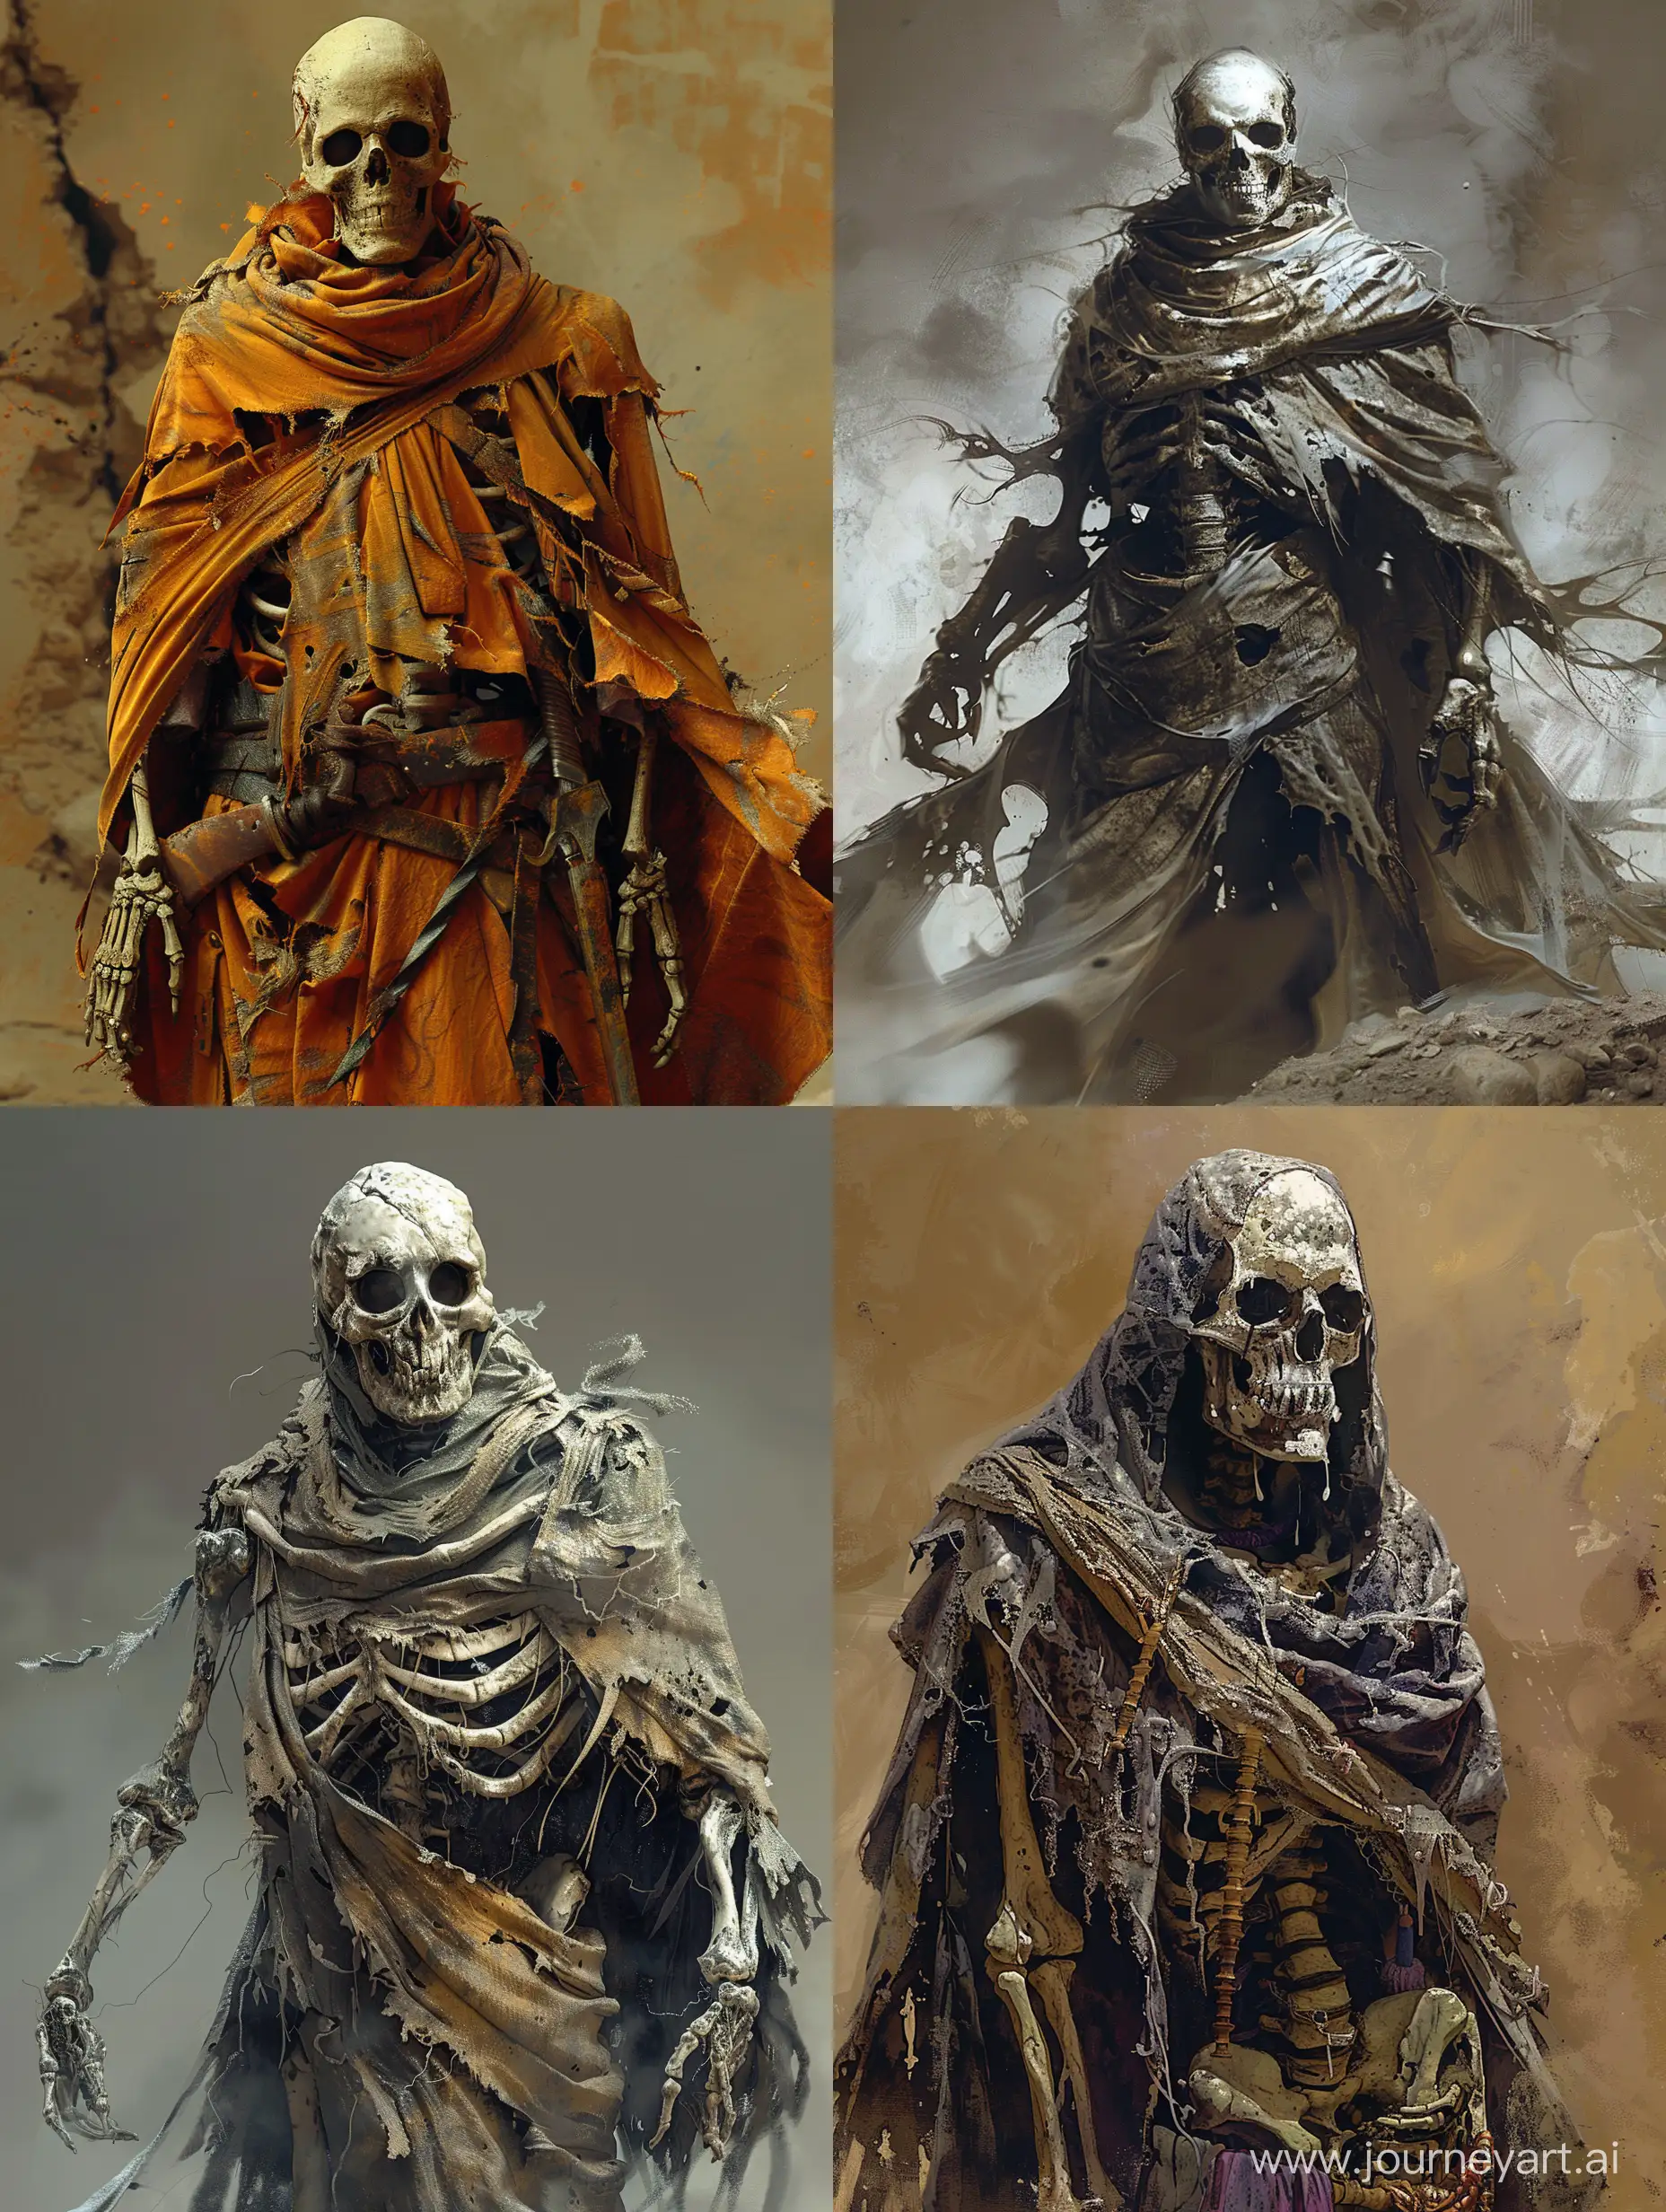 Skeleton warrior with torn robe,incredible detail,terrifying,Digital Art,Imaginary image,fantasy.